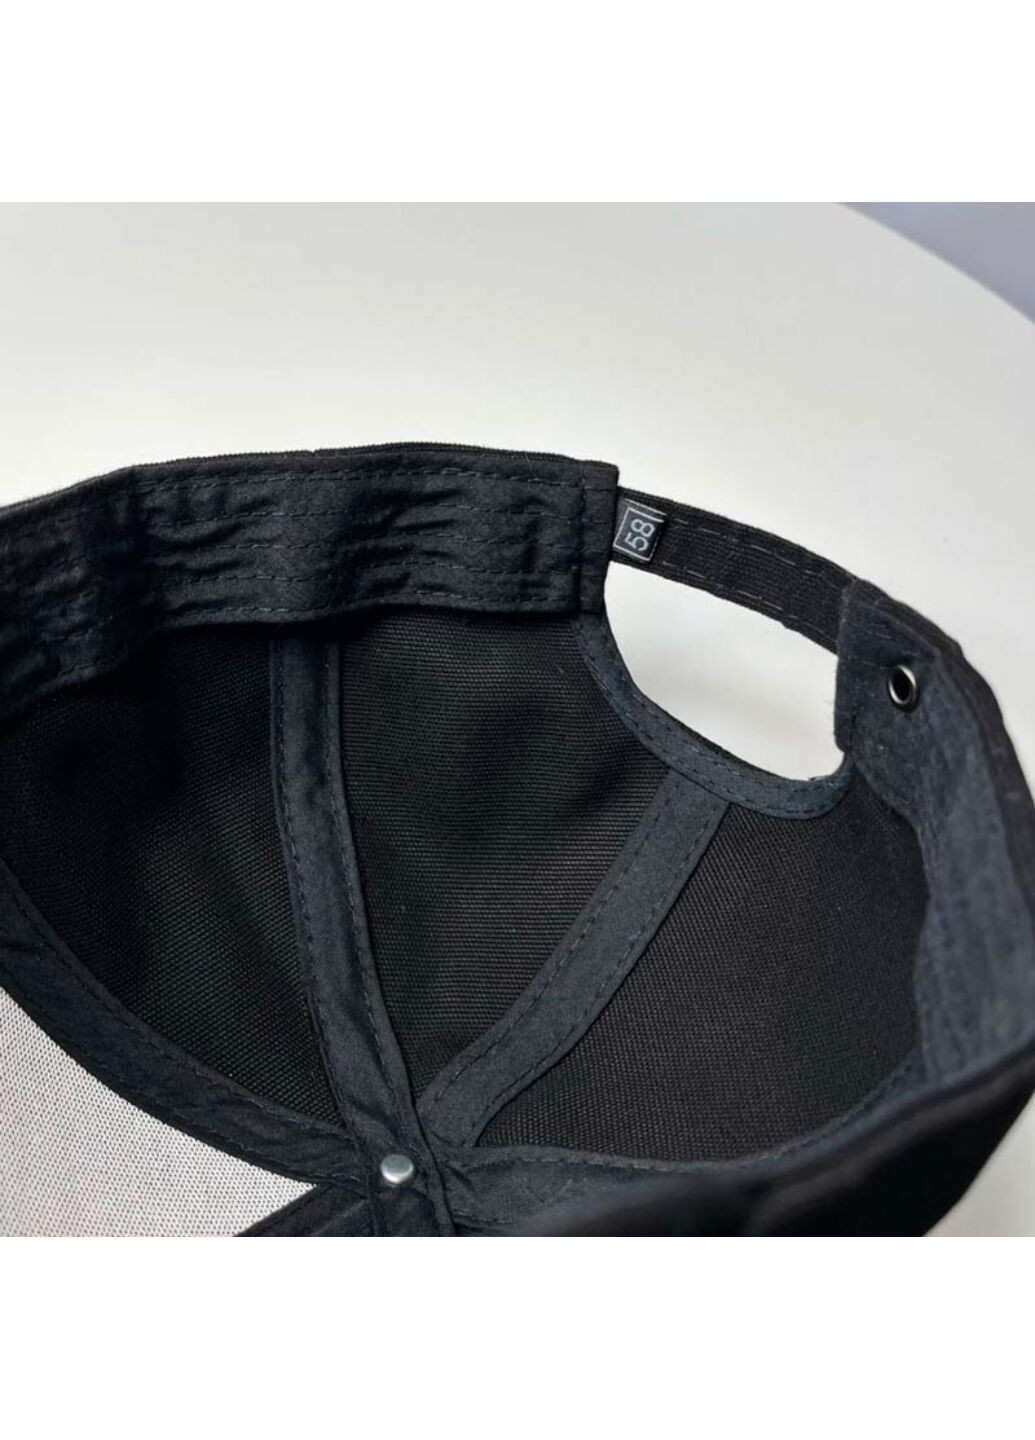 Кепка чорна з вишивкою тризуба+ukraine 02-4 женская Черный 55-59см No Brand (260174163)